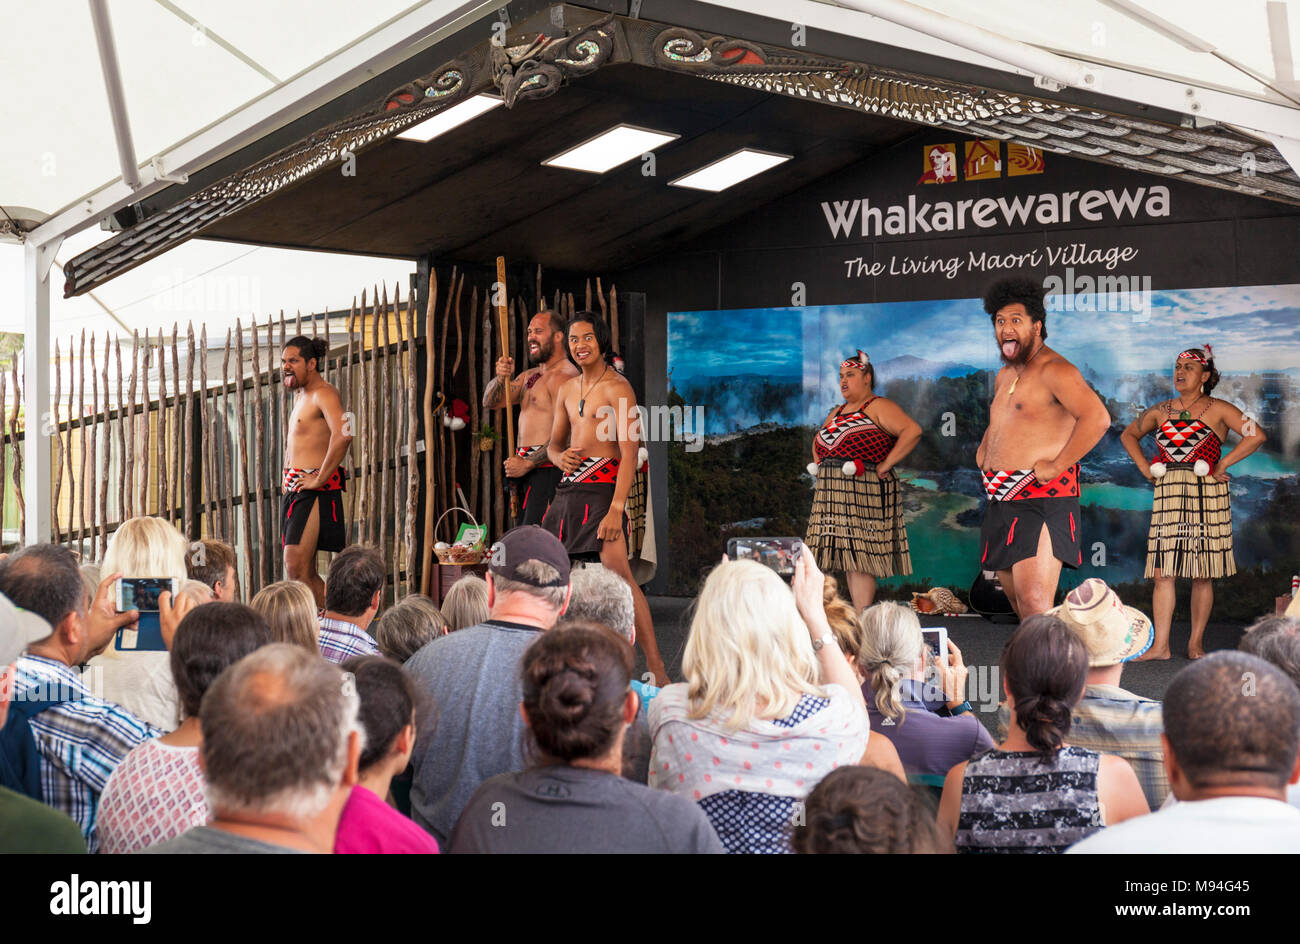 Neuseeland rotorua Neuseeland whakarewarewa rotorua Maori Kultur Unterhaltung Show mit Tänzern der Maori neuseeland Nordinsel Neuseeland Ozeanien Stockfoto